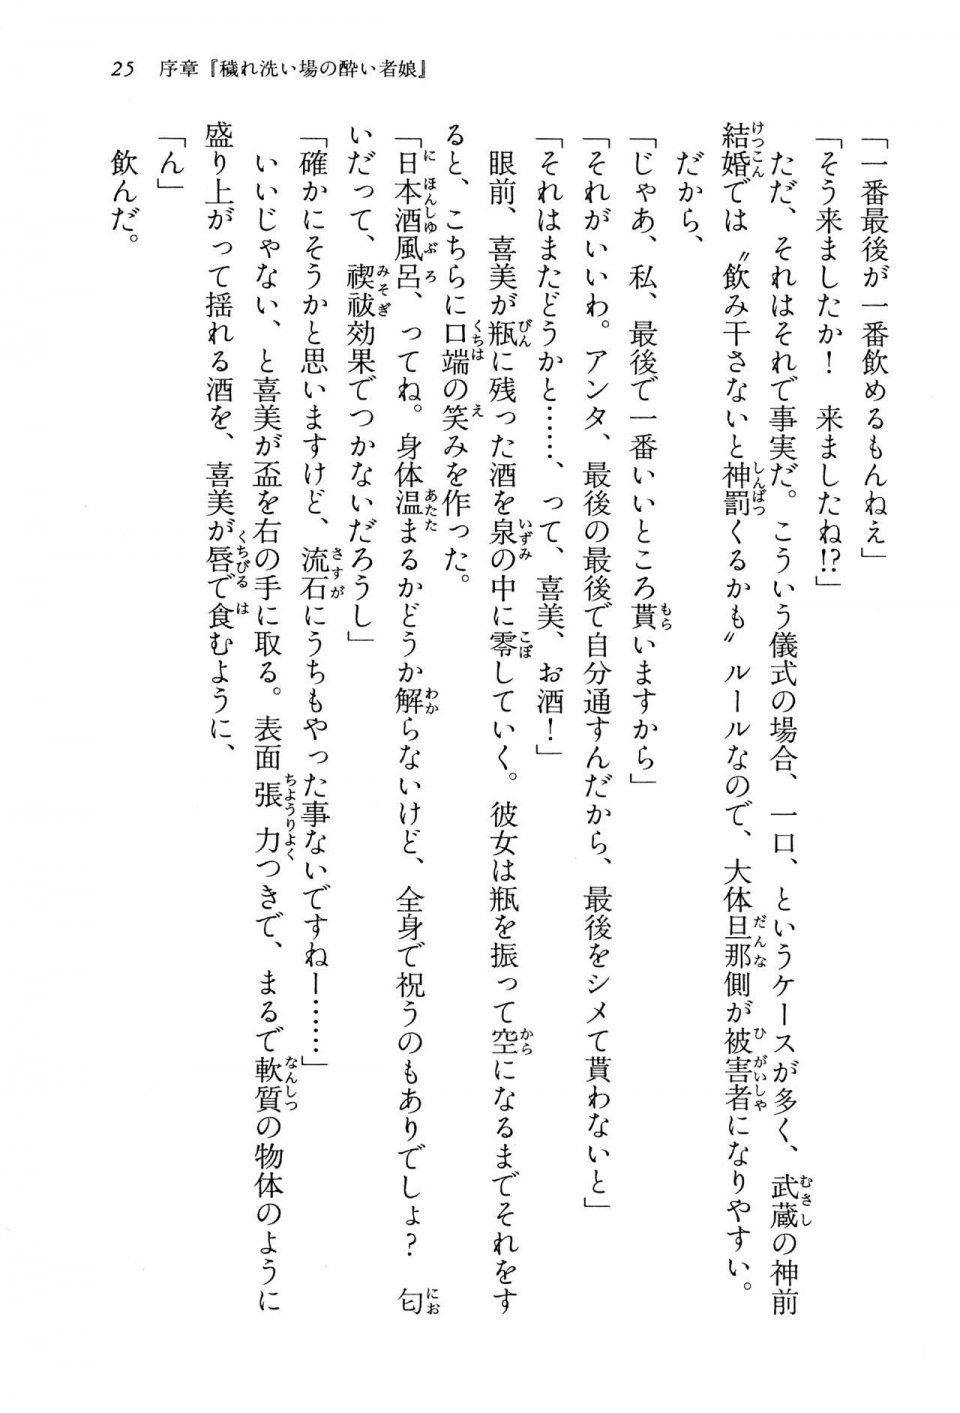 Kyoukai Senjou no Horizon BD Special Mininovel Vol 5(3A) - Photo #29